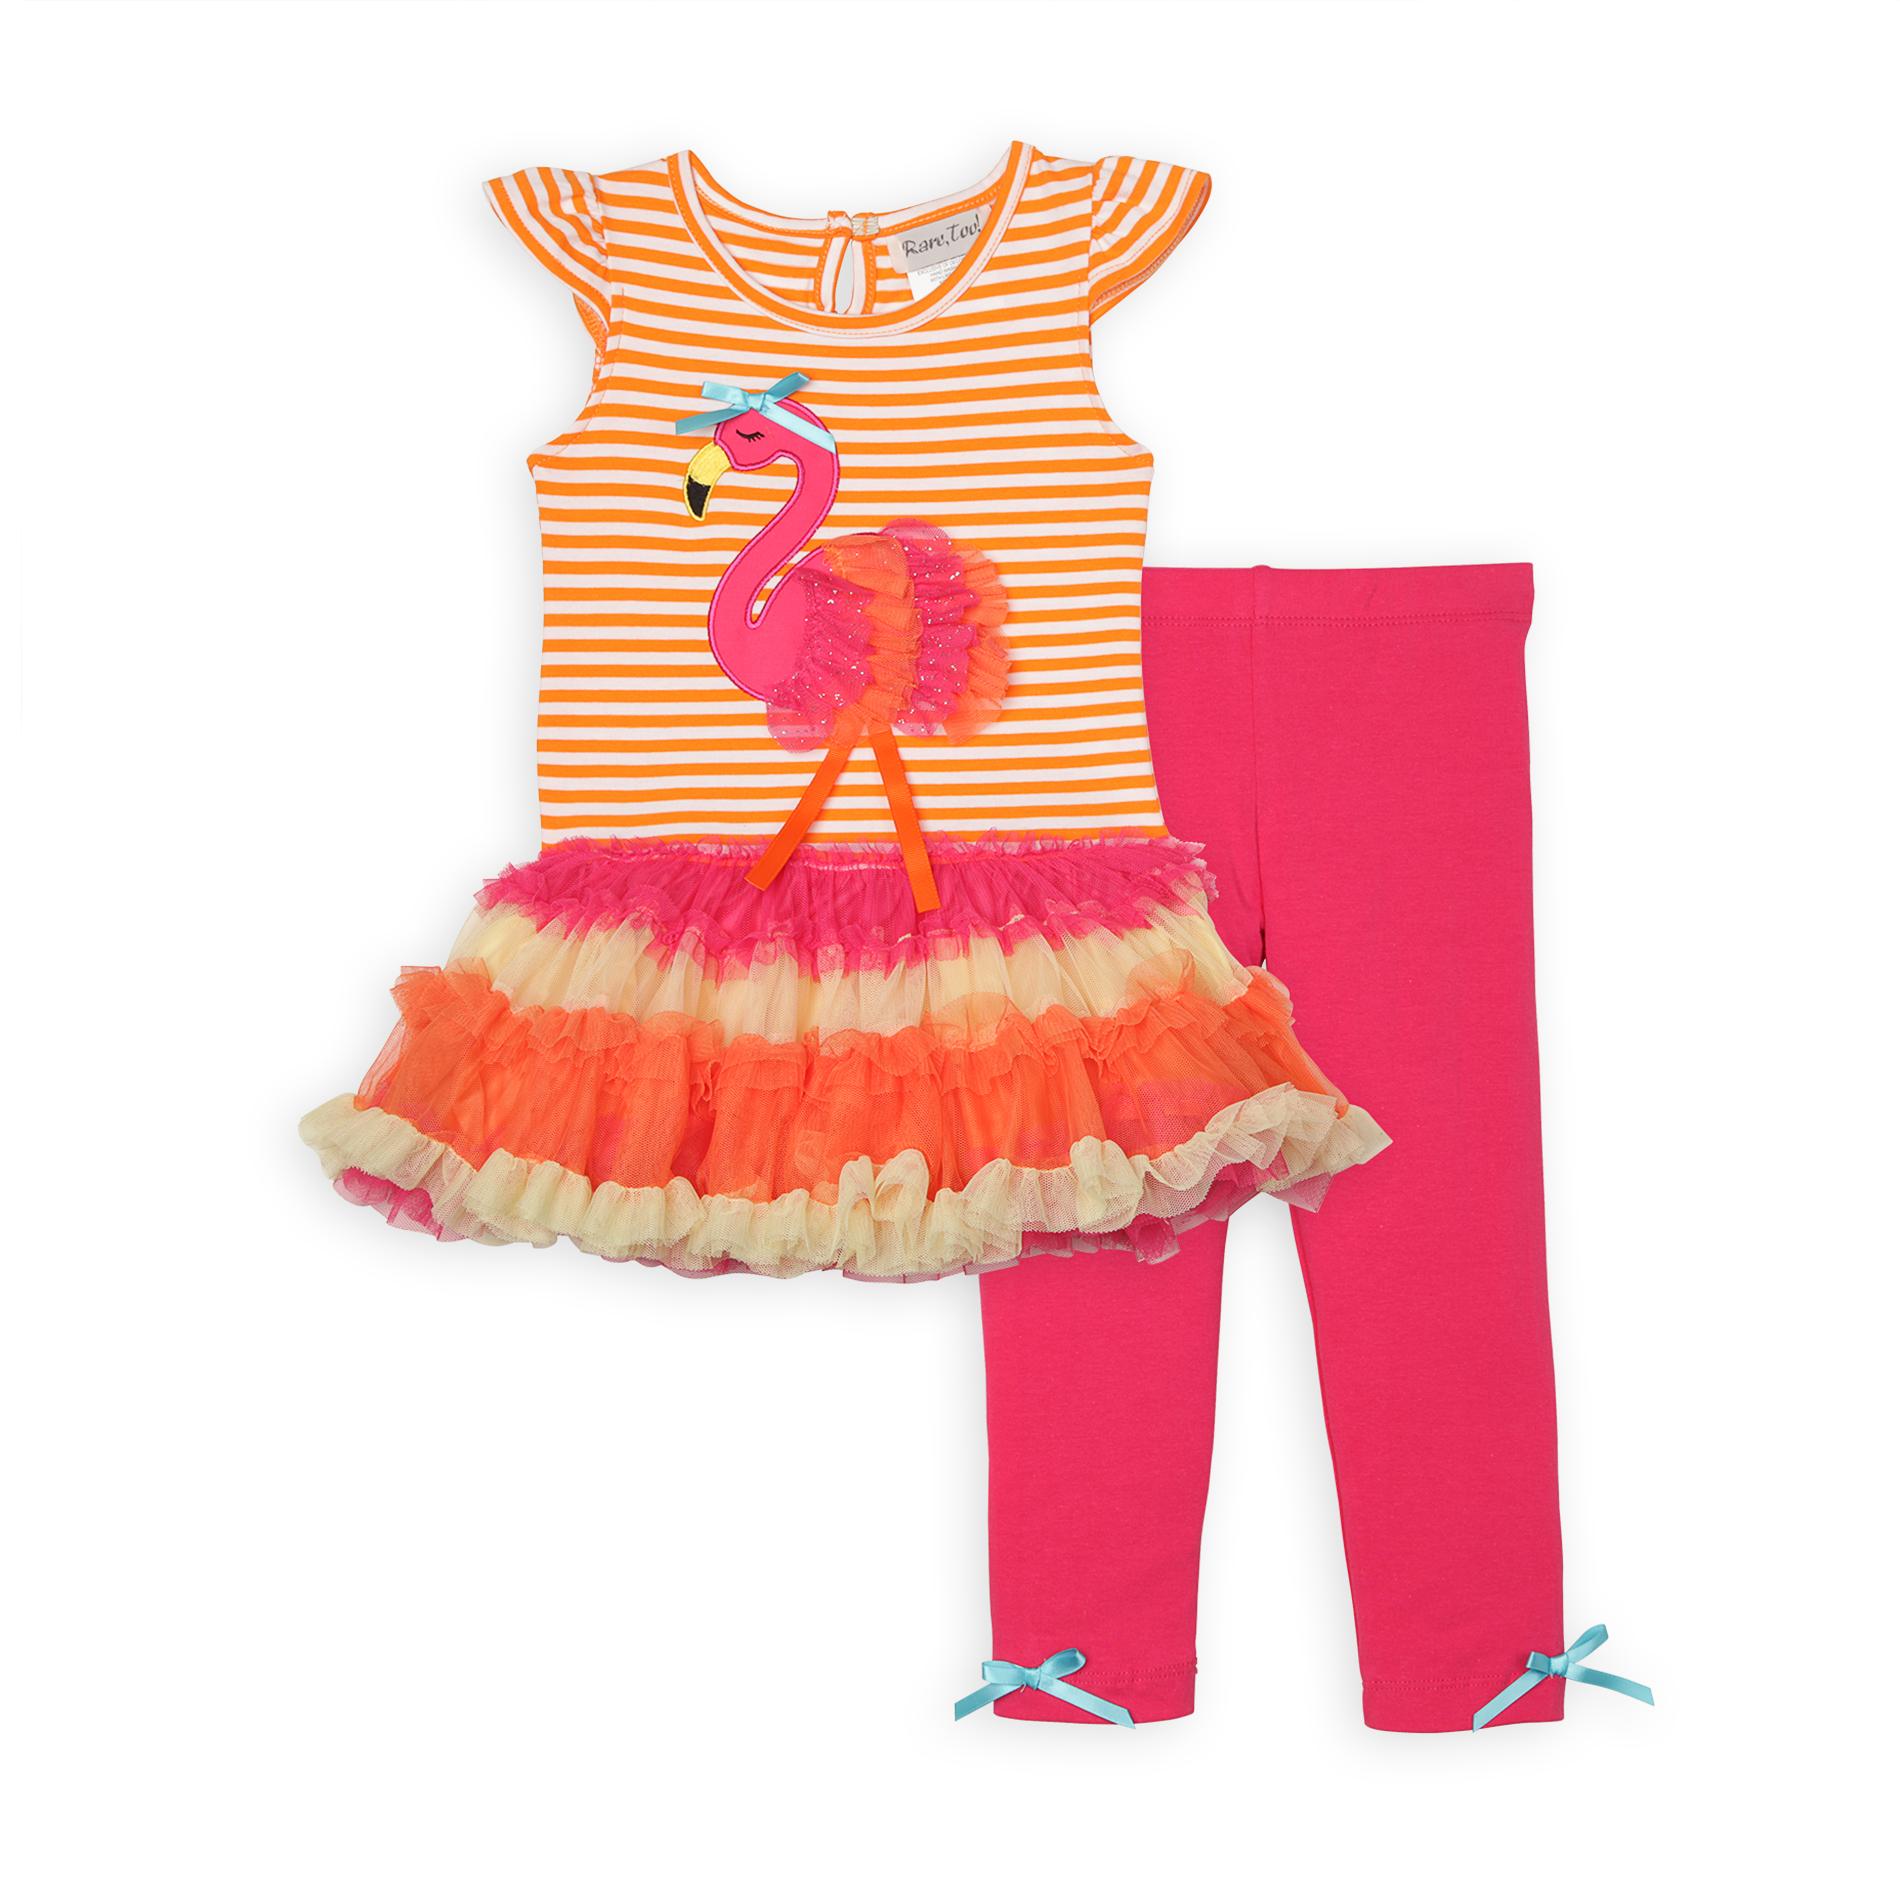 Rare Too Infant & Toddler Girl's Tunic Top & Leggings - Flamingo & Stripes